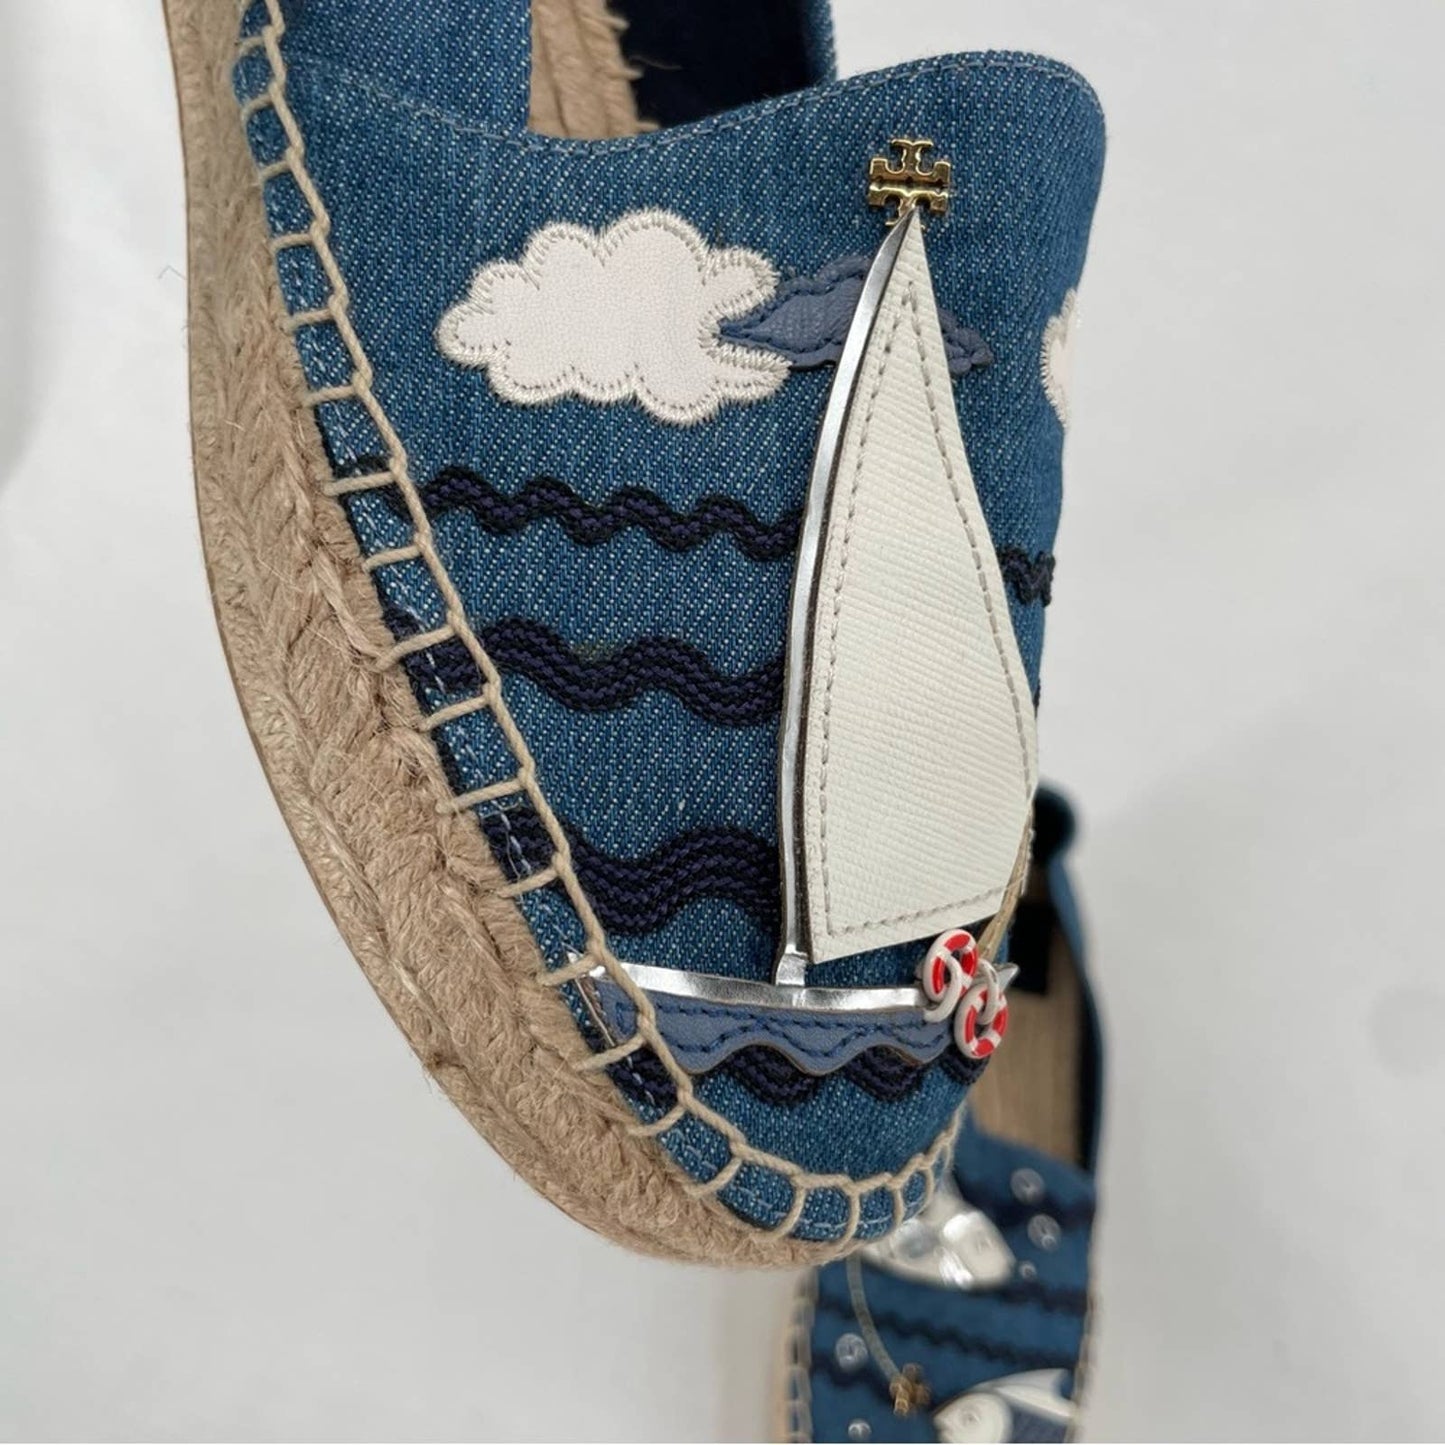 Tory Burch Seaside Espadrille Denim Chambray Nautical Fishing Sailing Boat Shoes Size 7